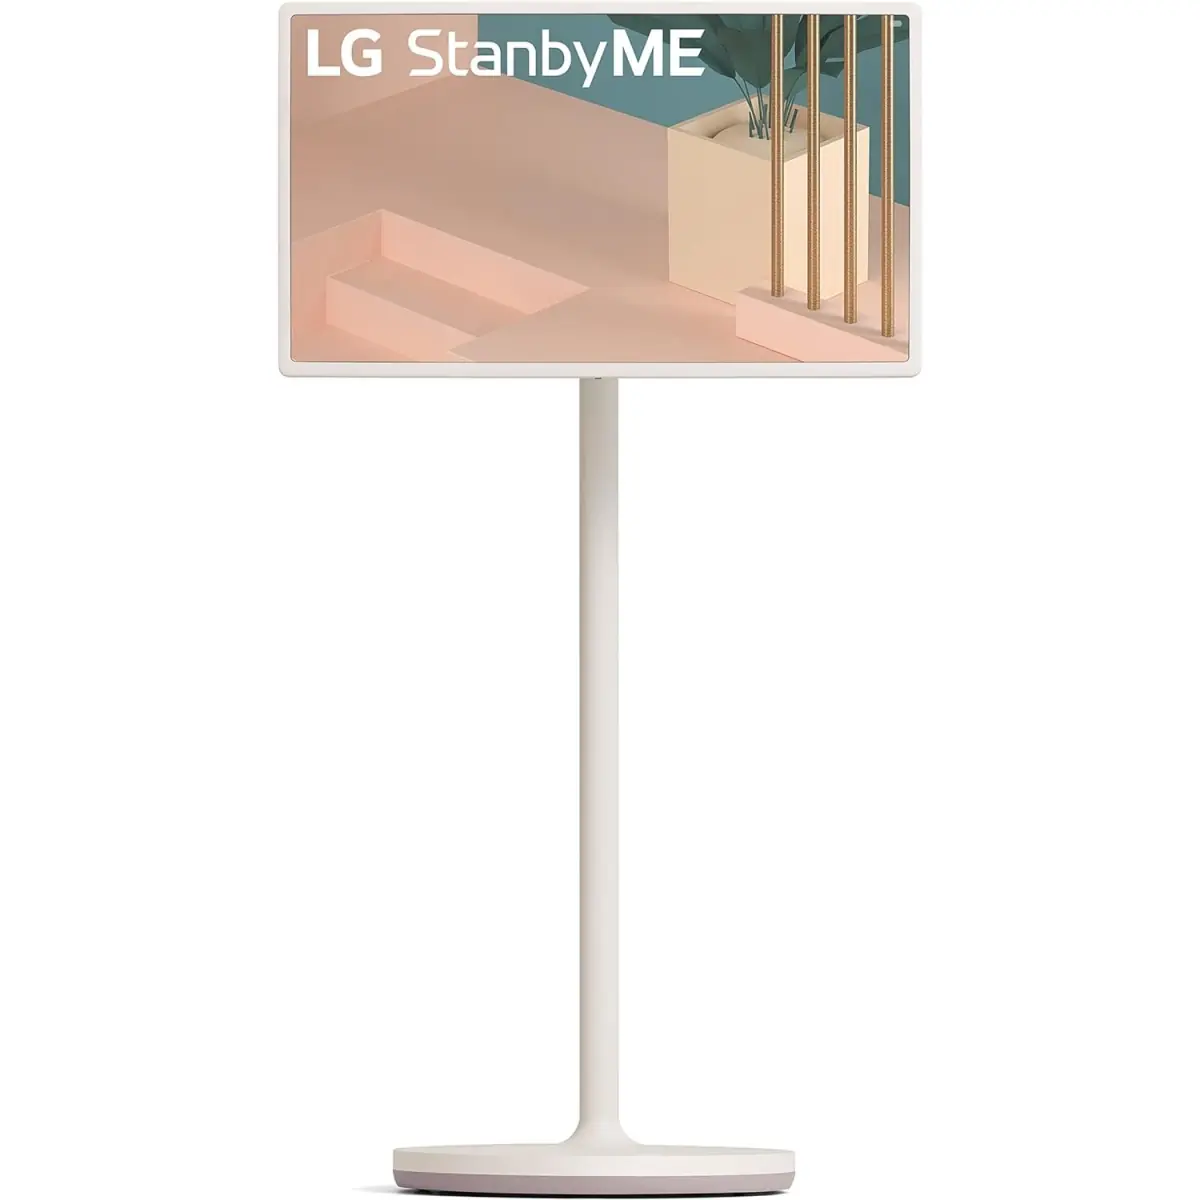 LG StanbyME 27 inch